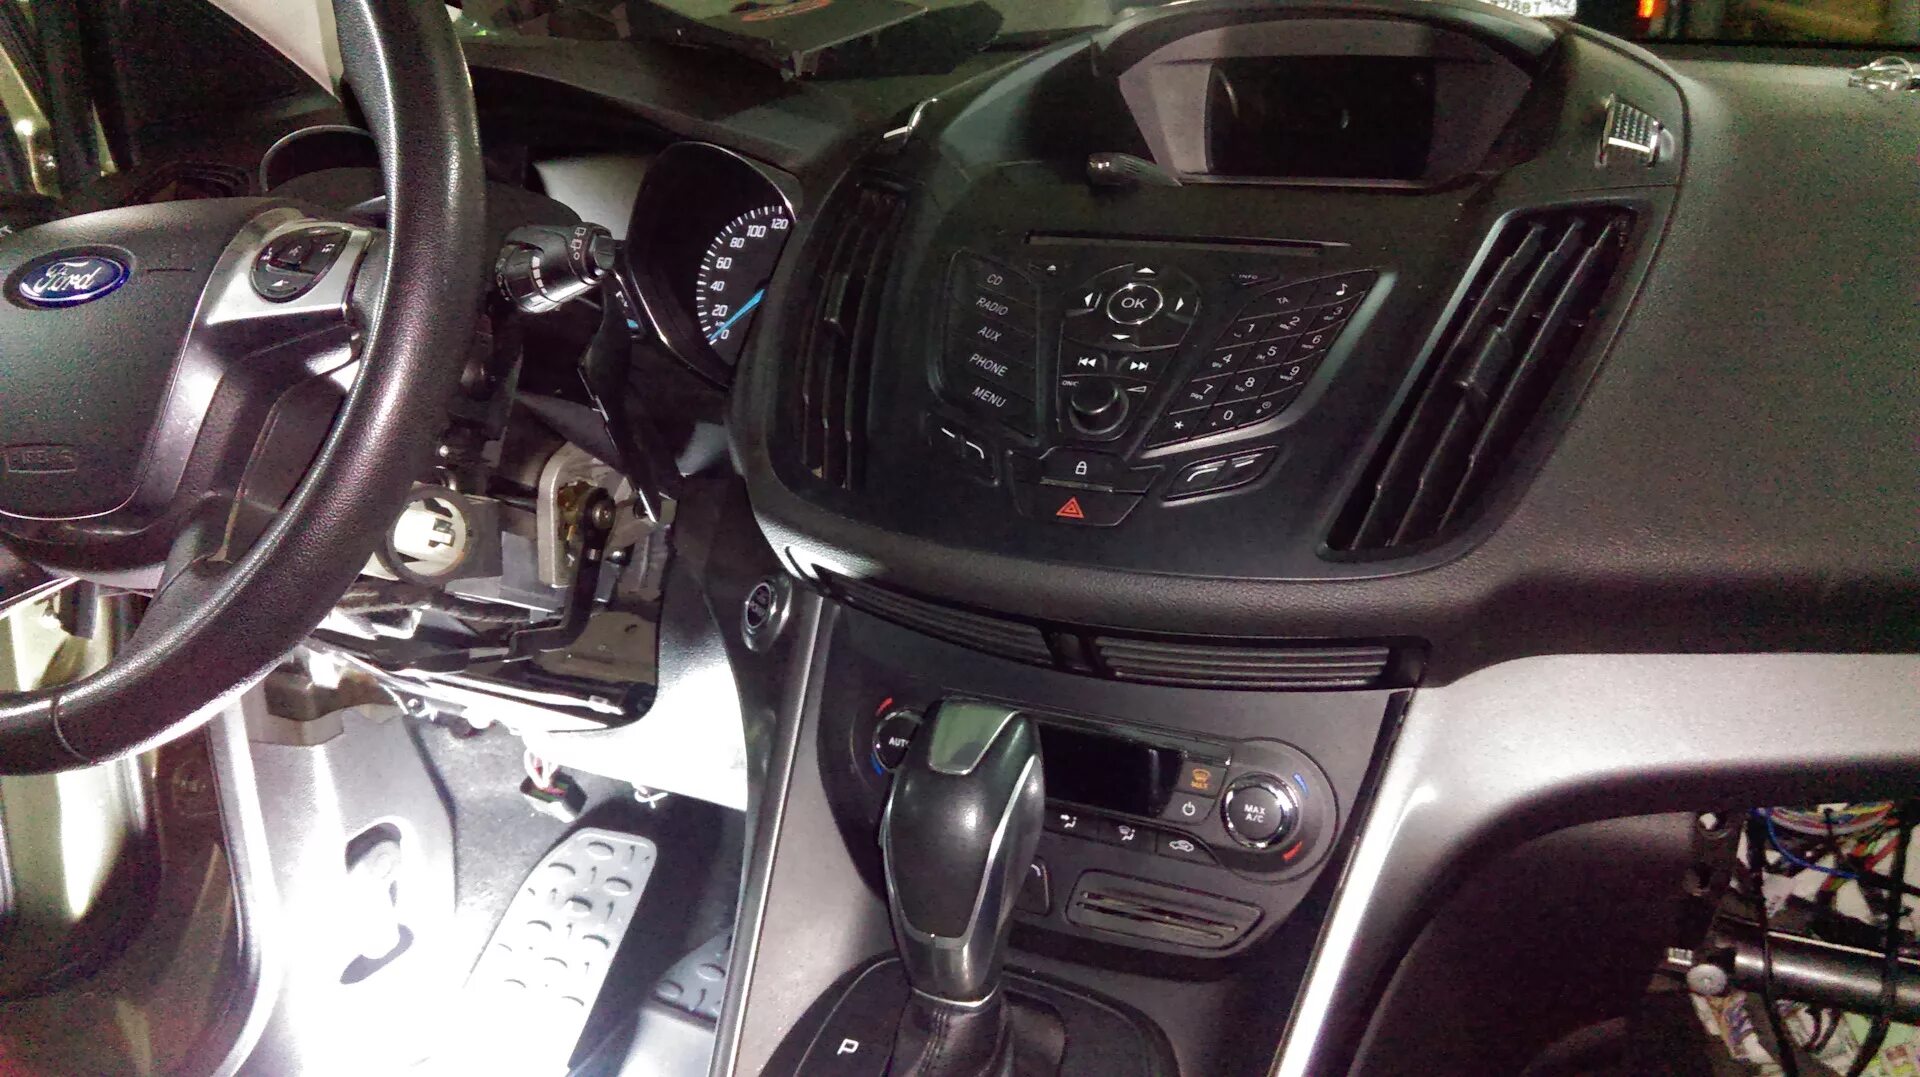 Ford Kuga 2010 под рулем место для чипа. Кнопки громкой связи Куга 2. Парктроники Форд Куга 2. Держатель для телефона в Форд Куга 2.